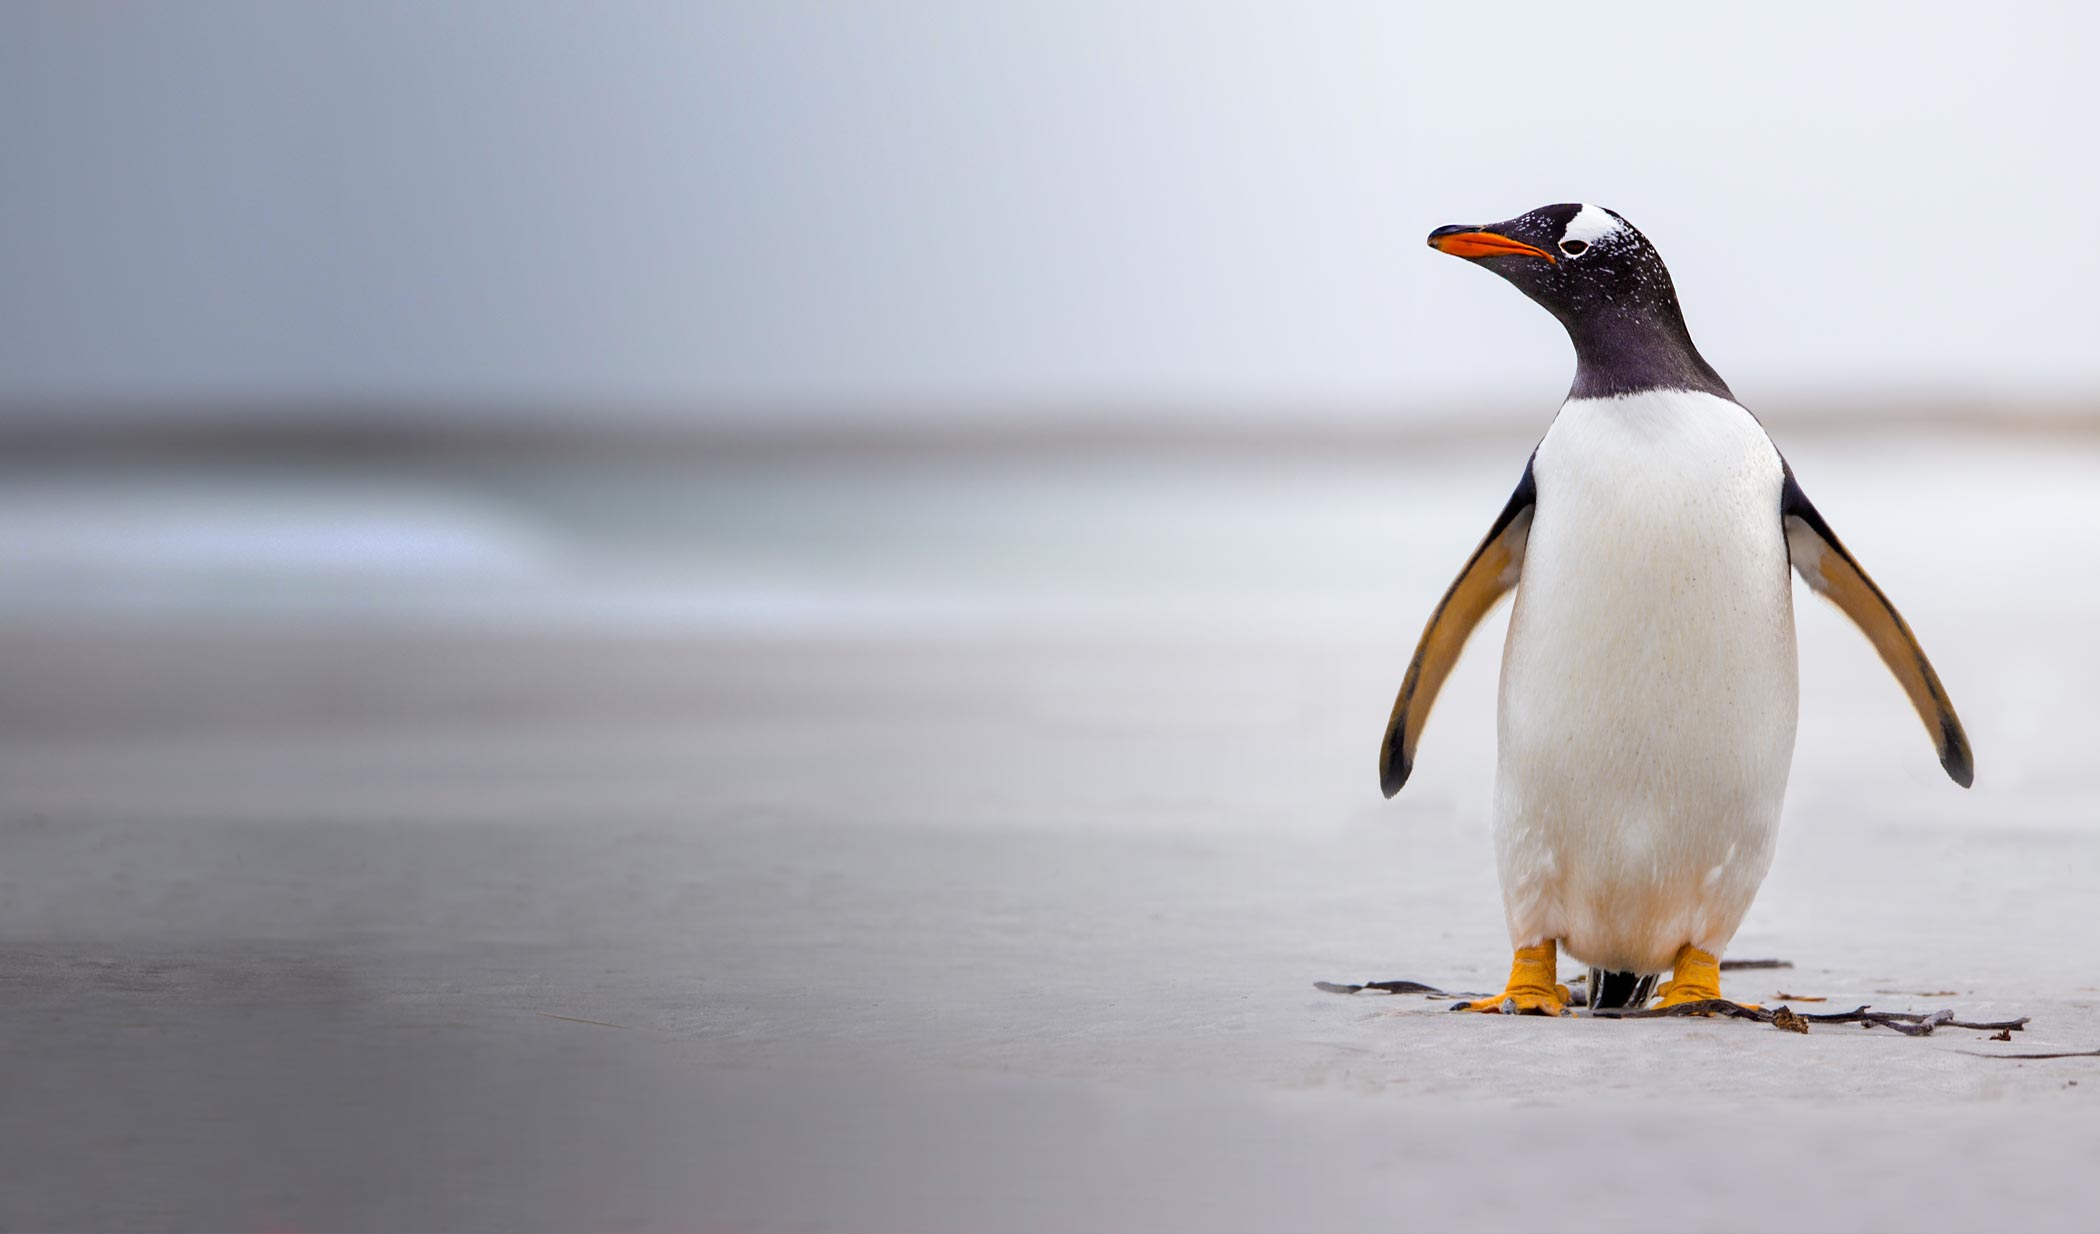 King penguin | Pathtrack